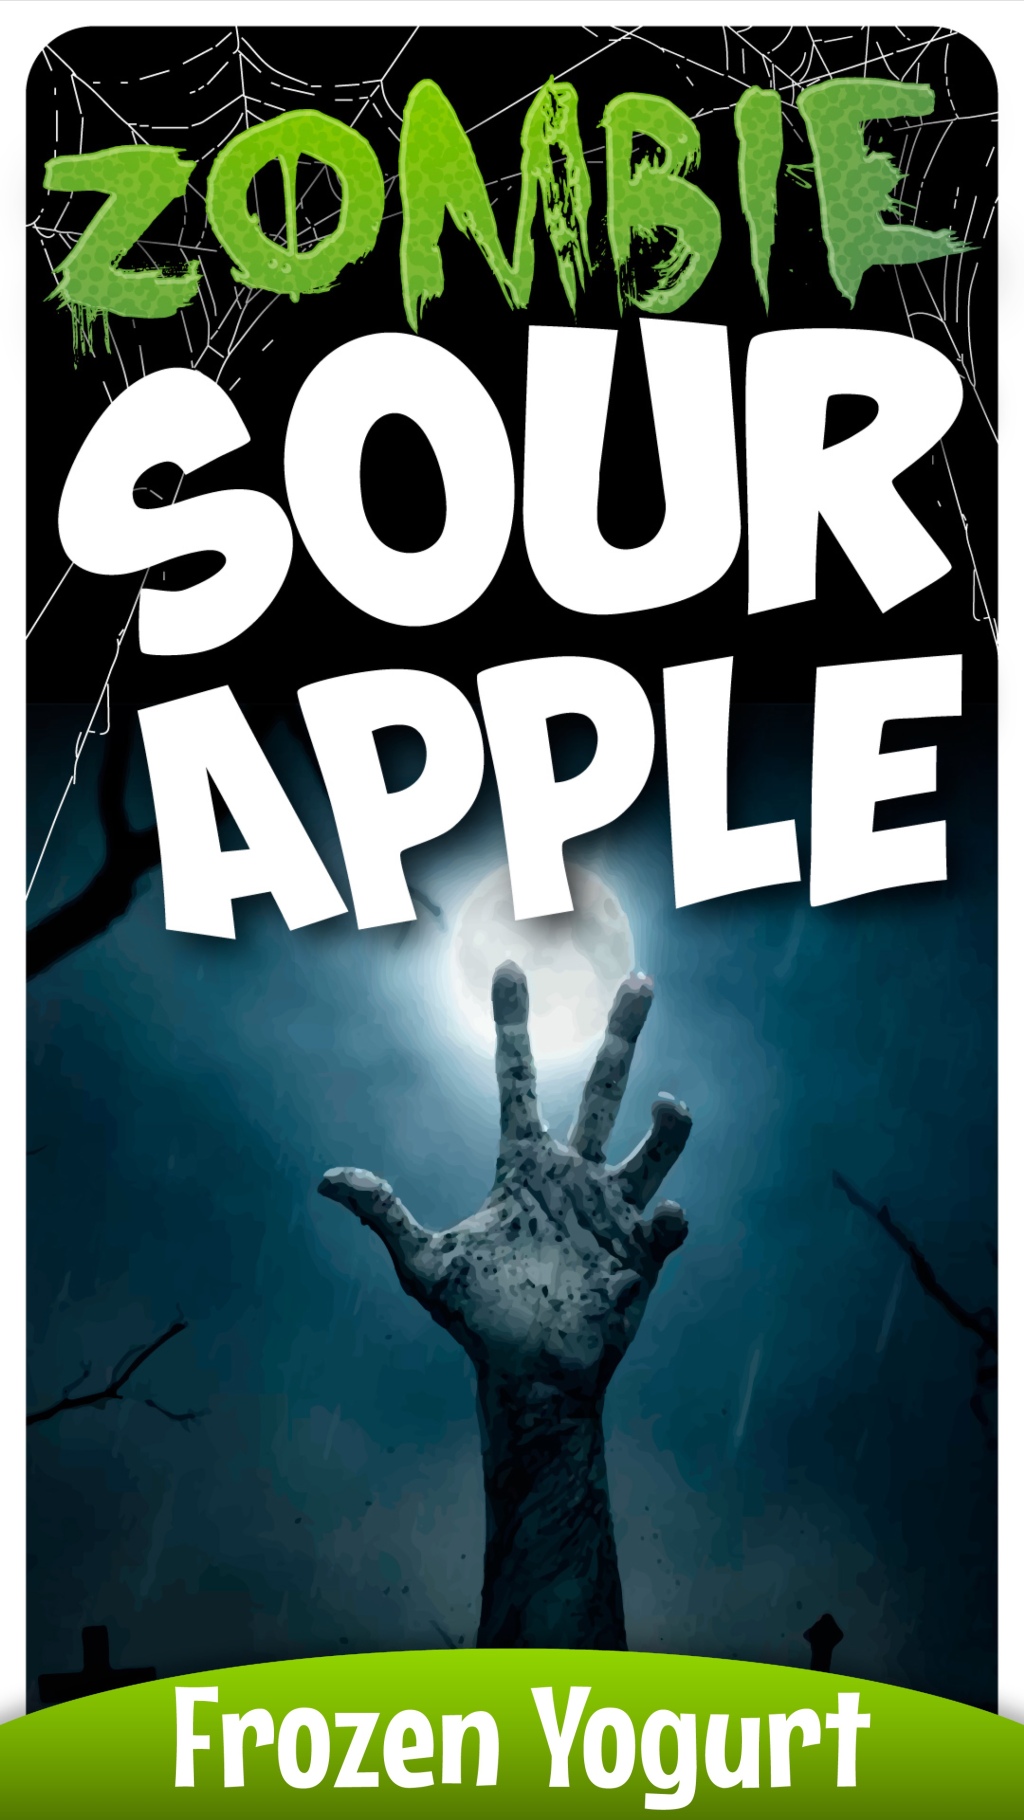 Cool King® “Zombie Sour Apple” Frozen Yogurt Advertisement